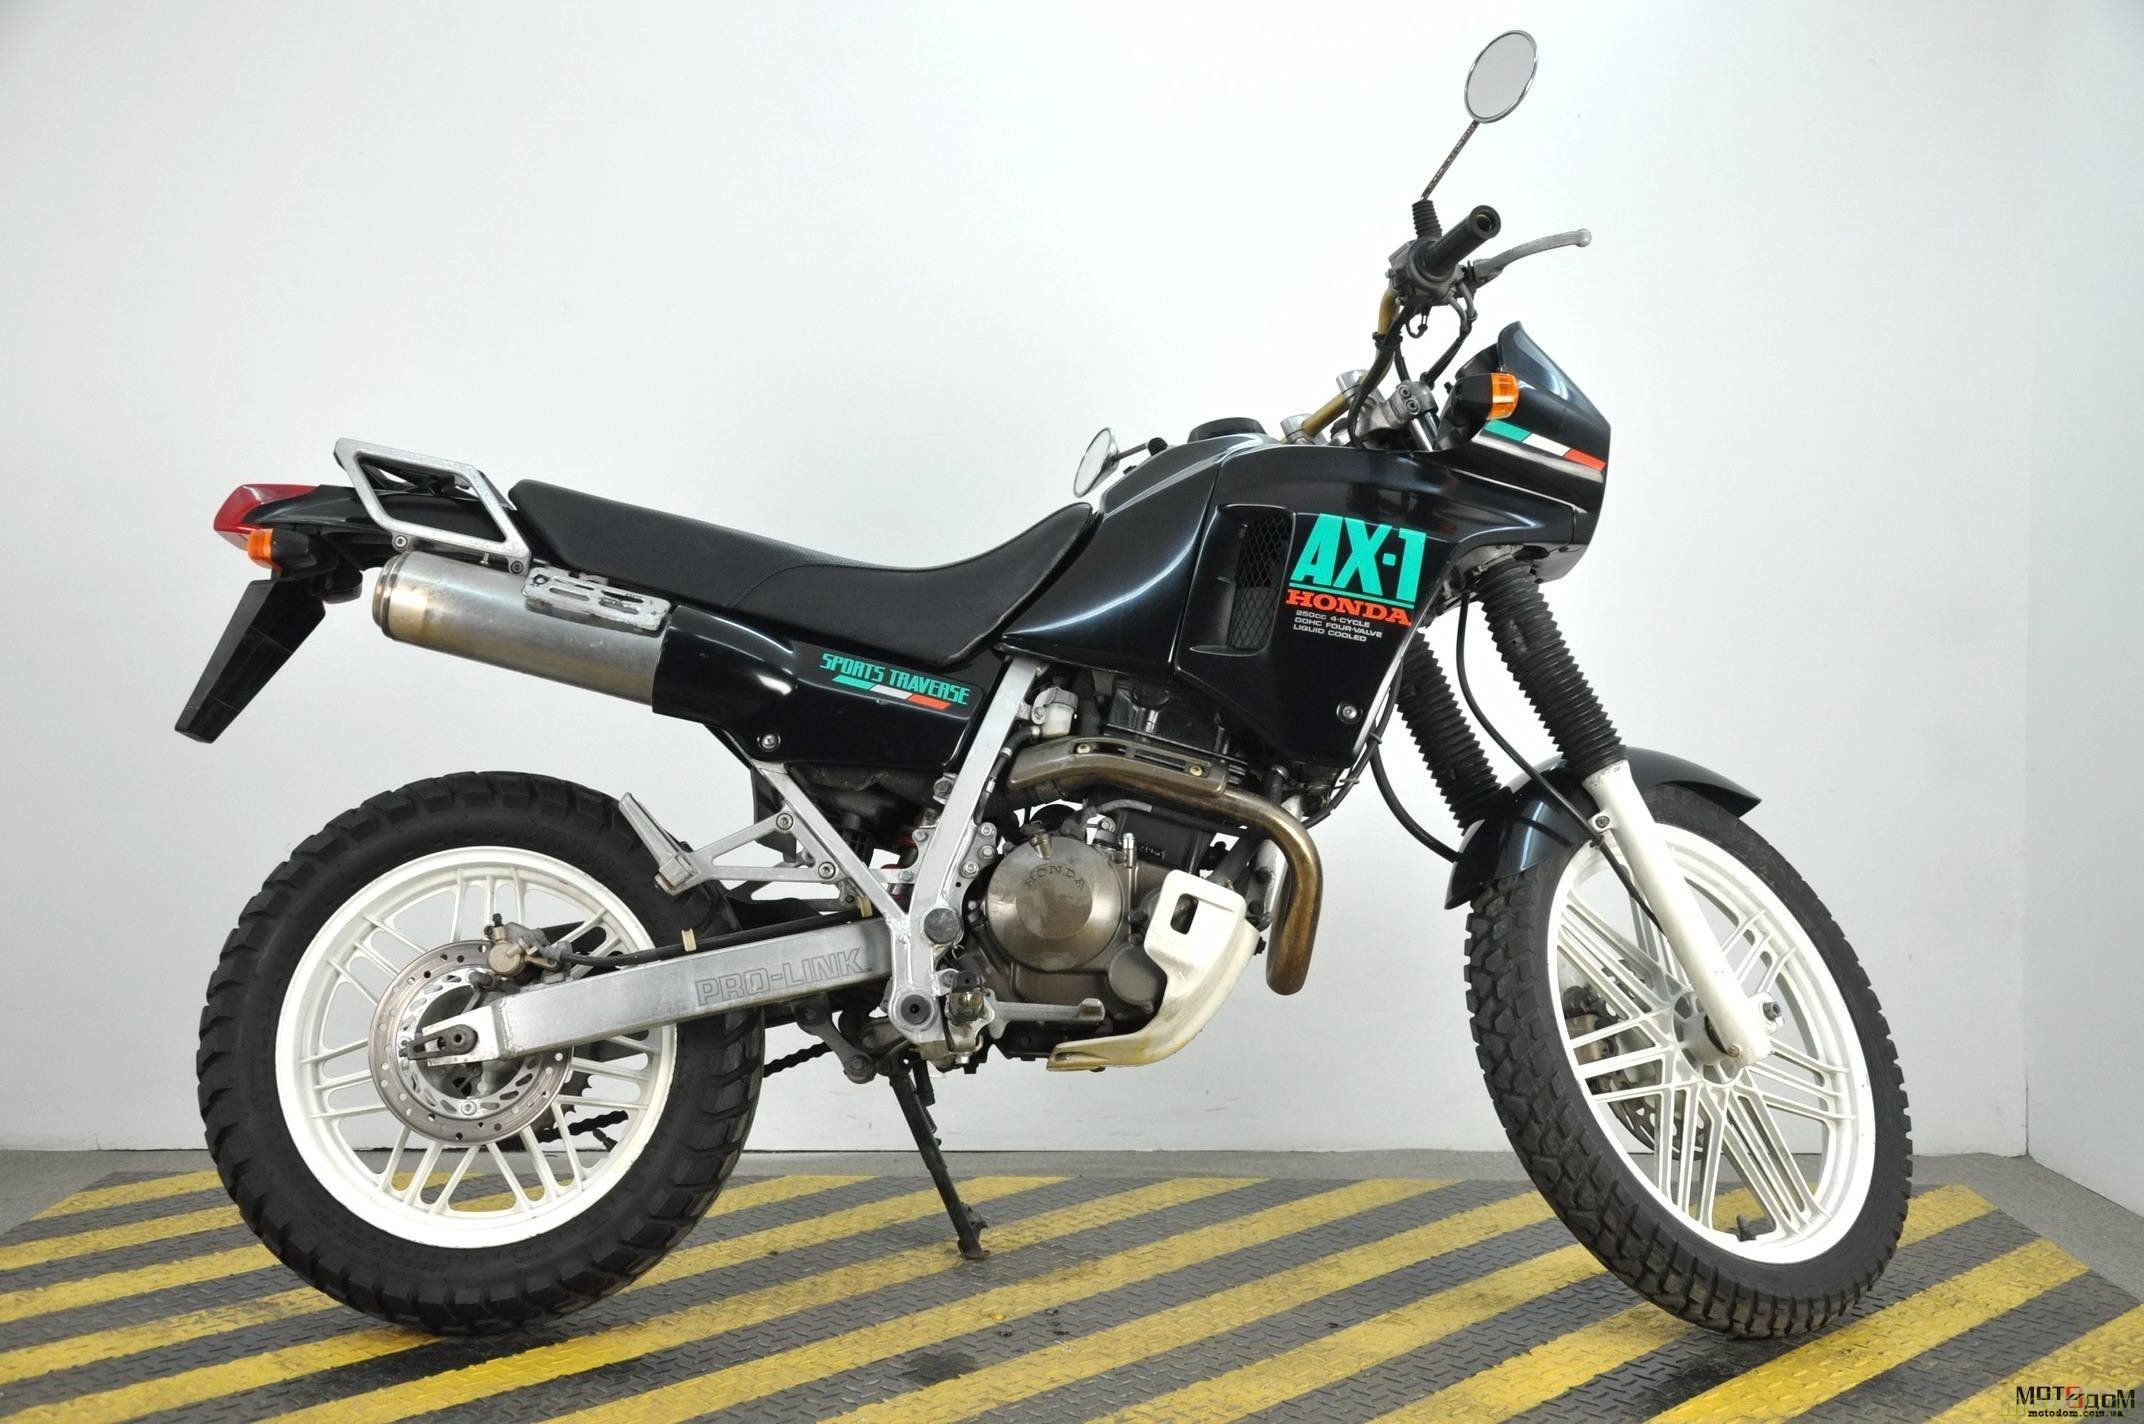 Мотоцикл yamaha serow 250: обзор, технические характеристики